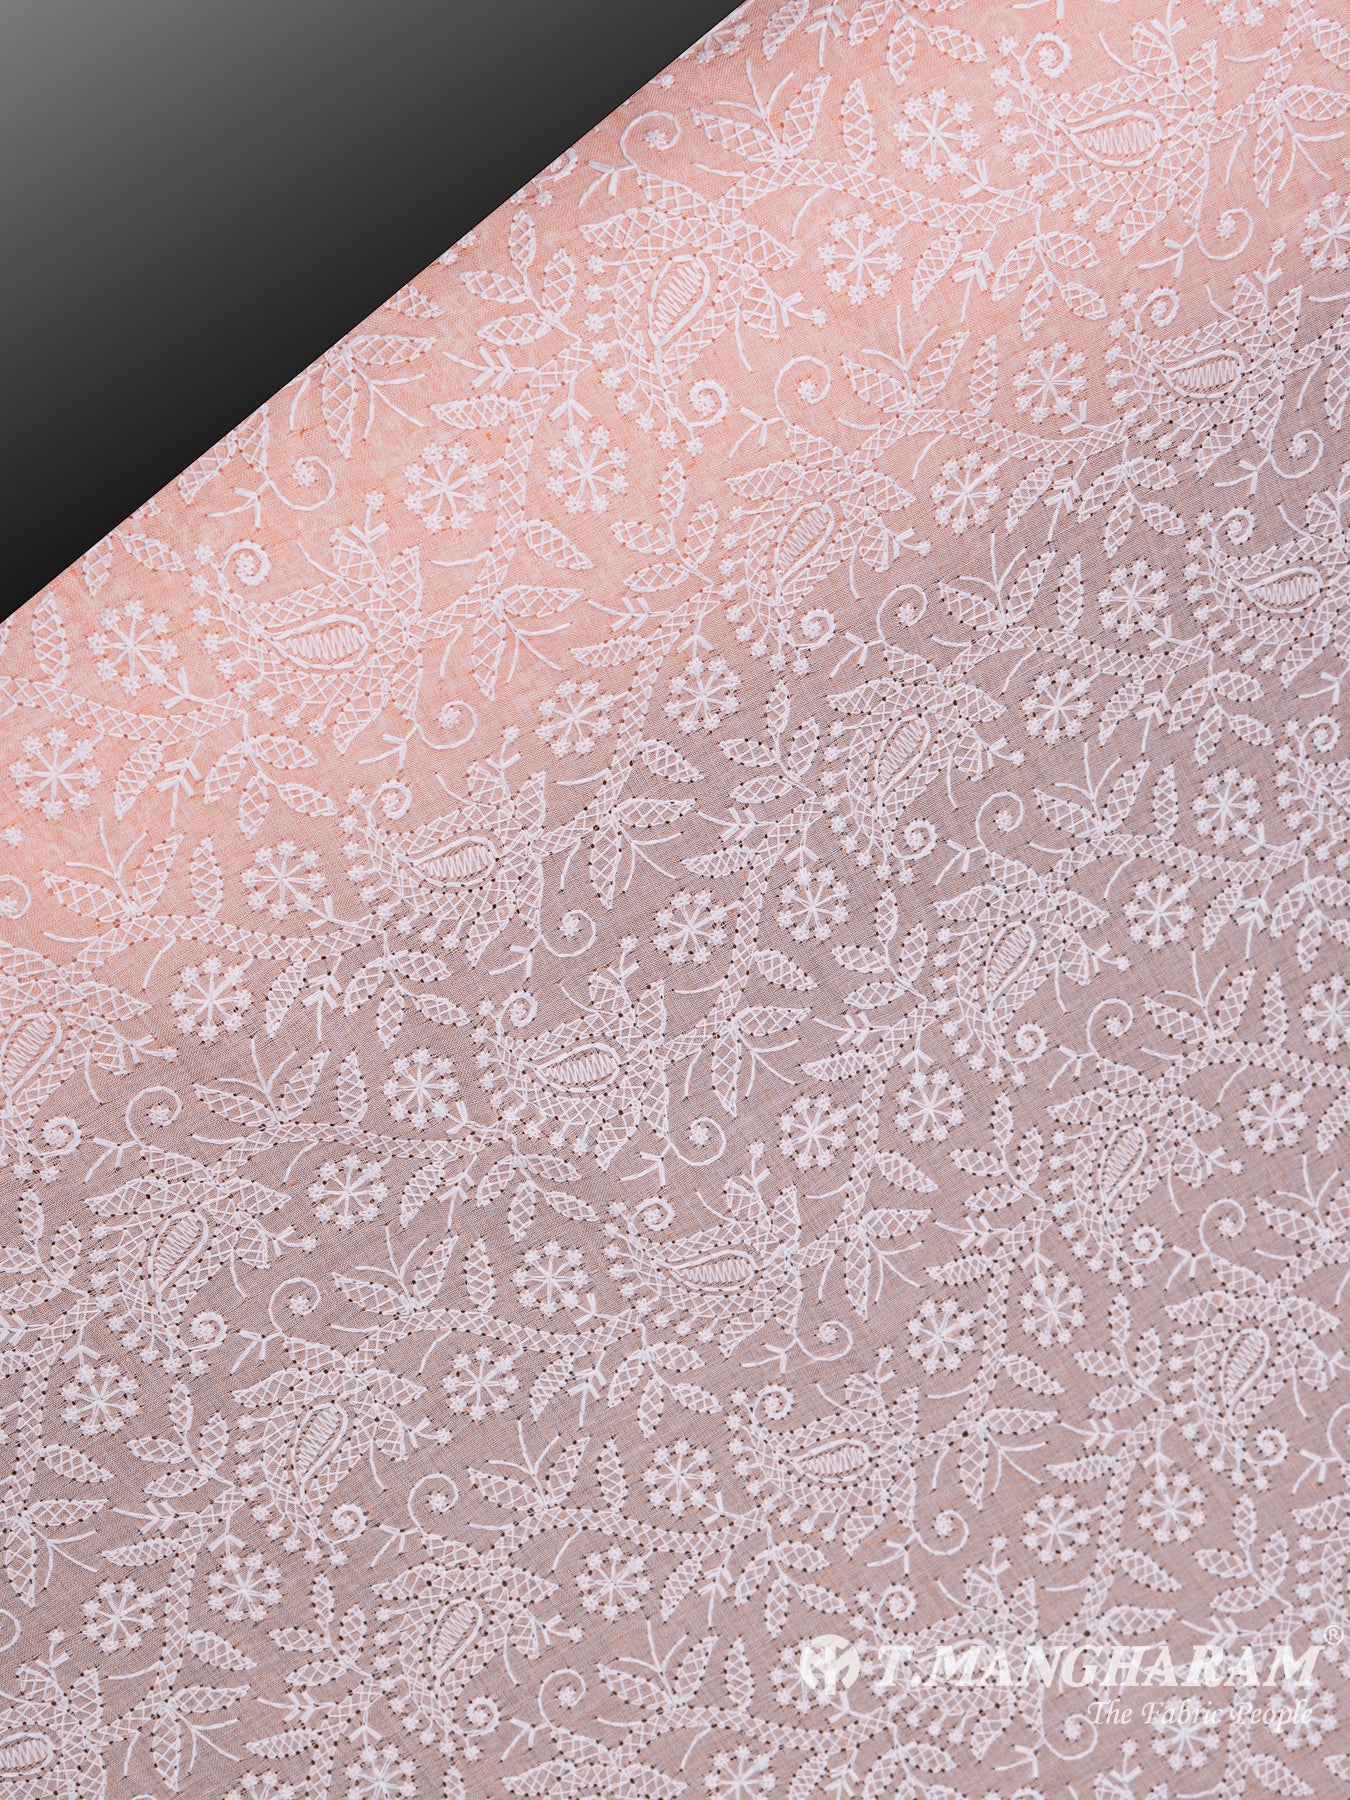 Peach Cotton Embroidery Fabric - EB4807 view-2